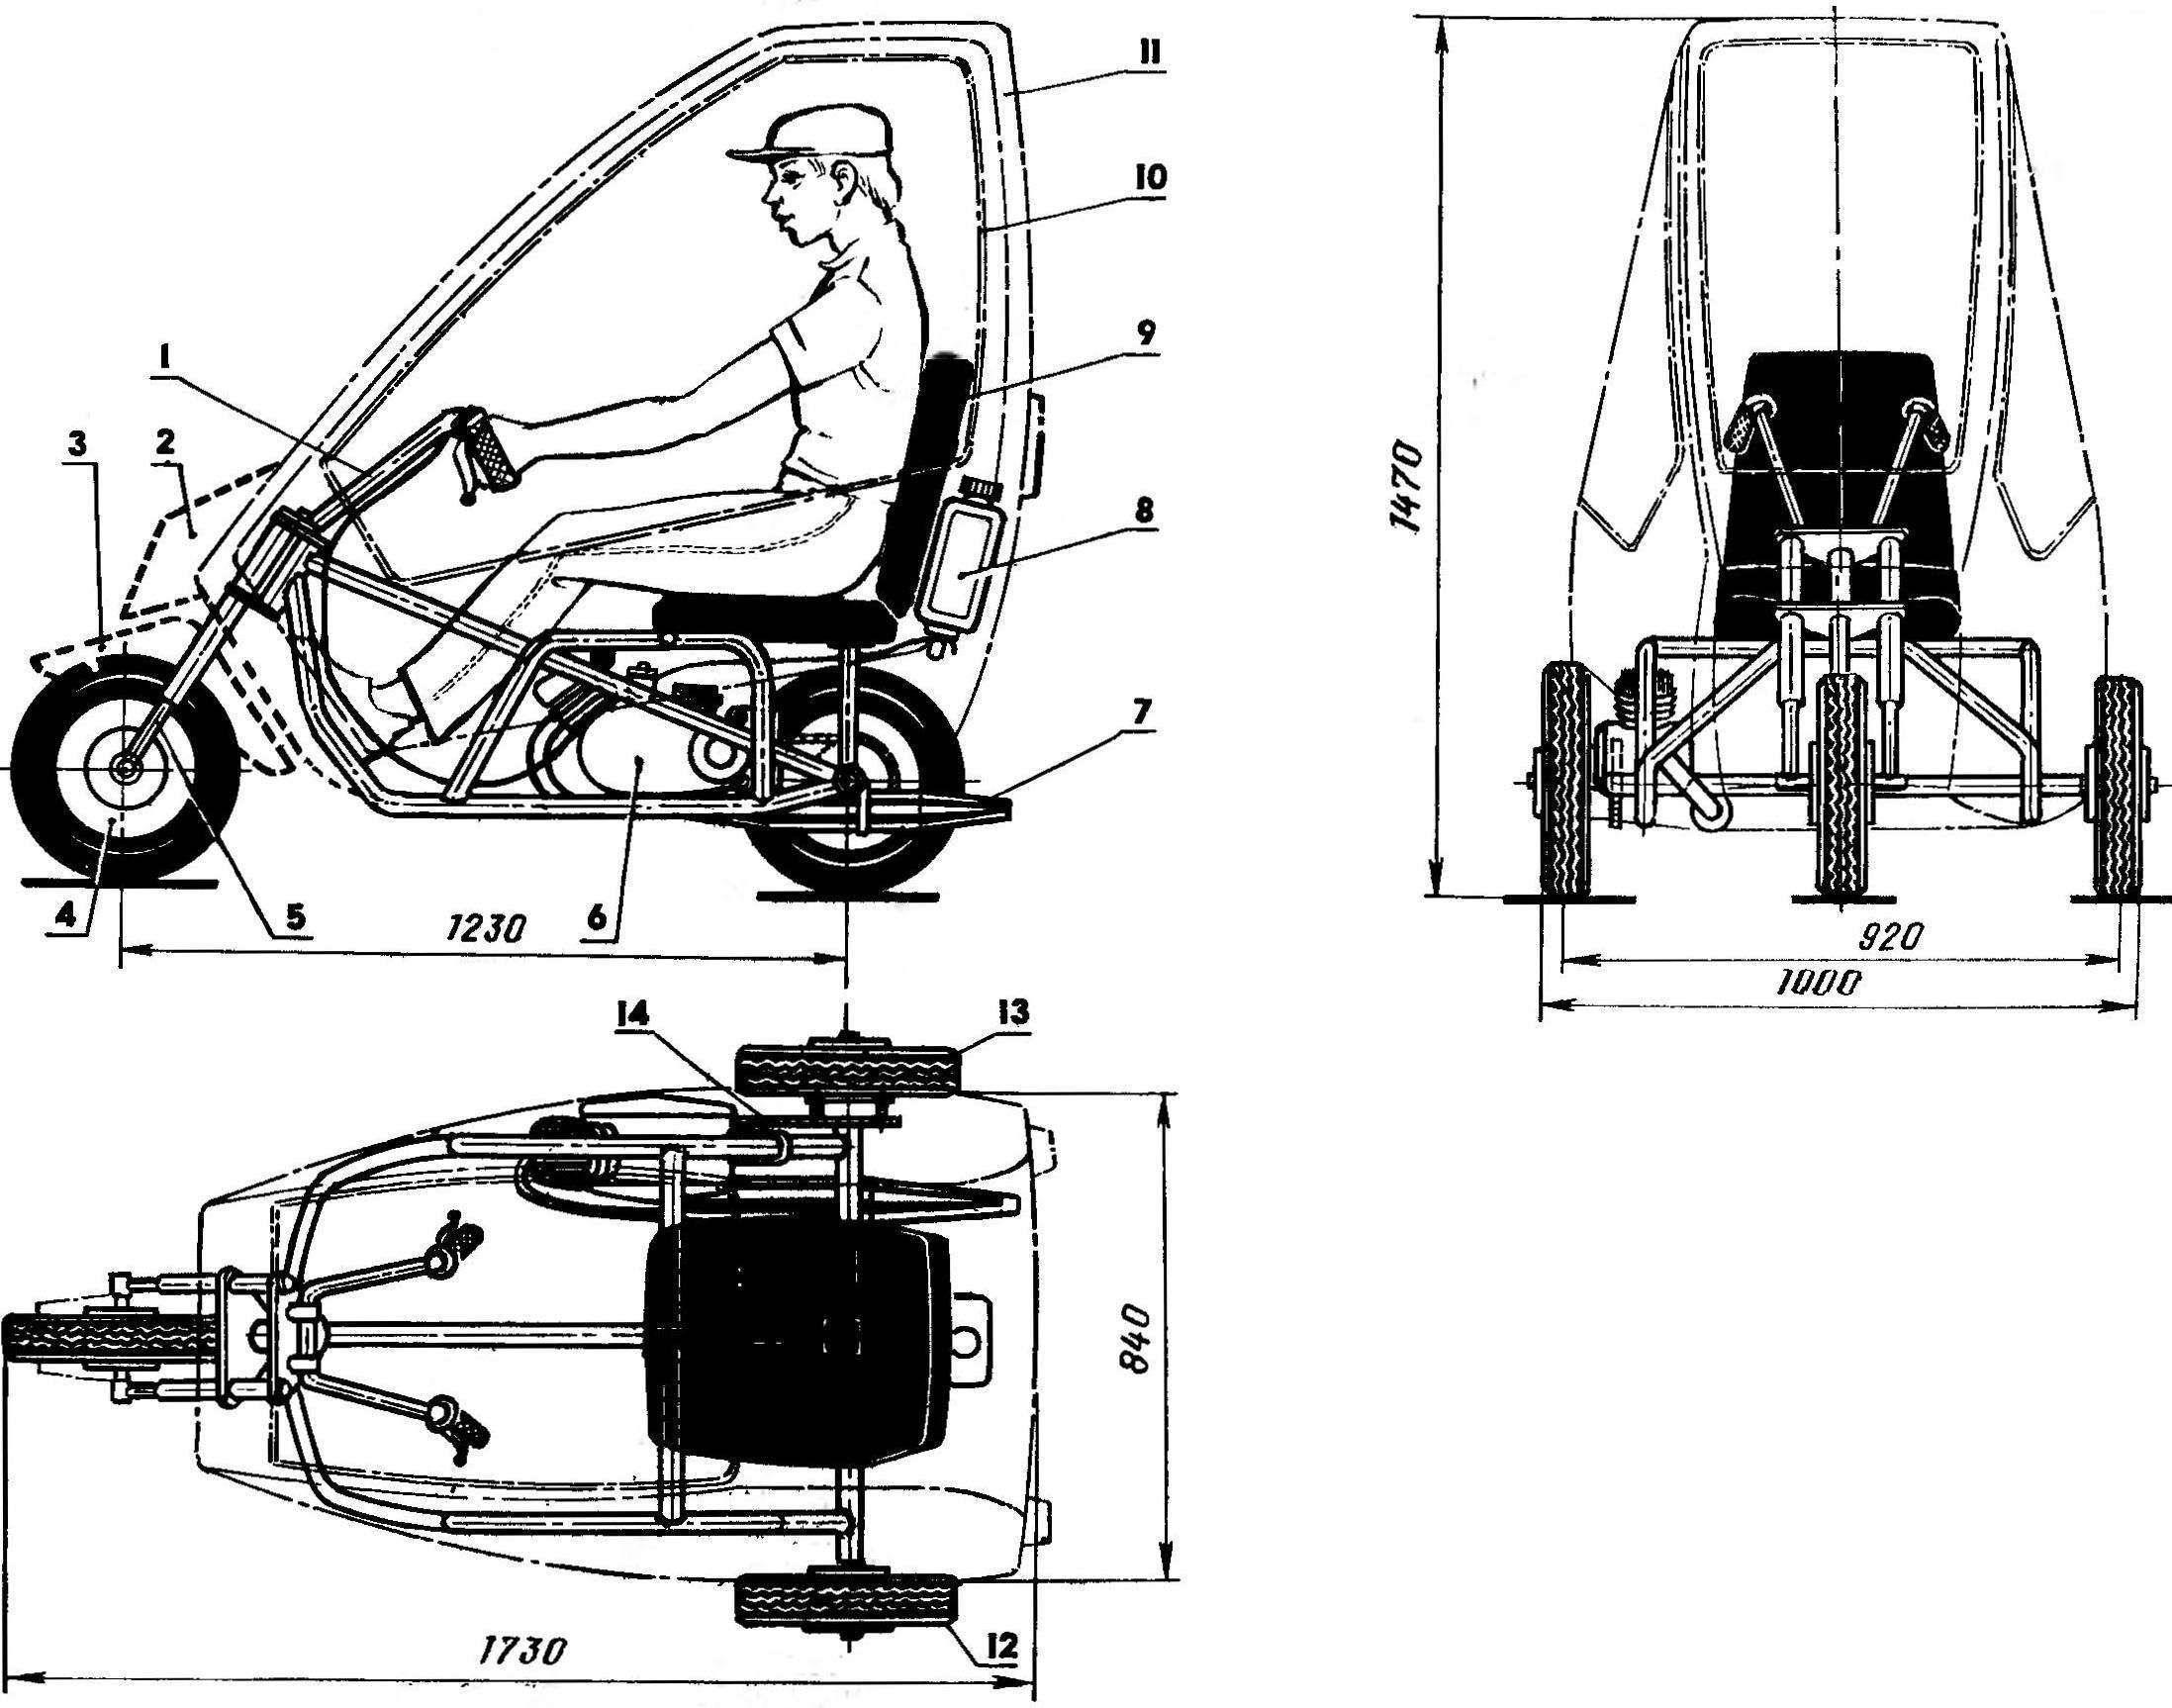 The layout of three-wheeled mokik